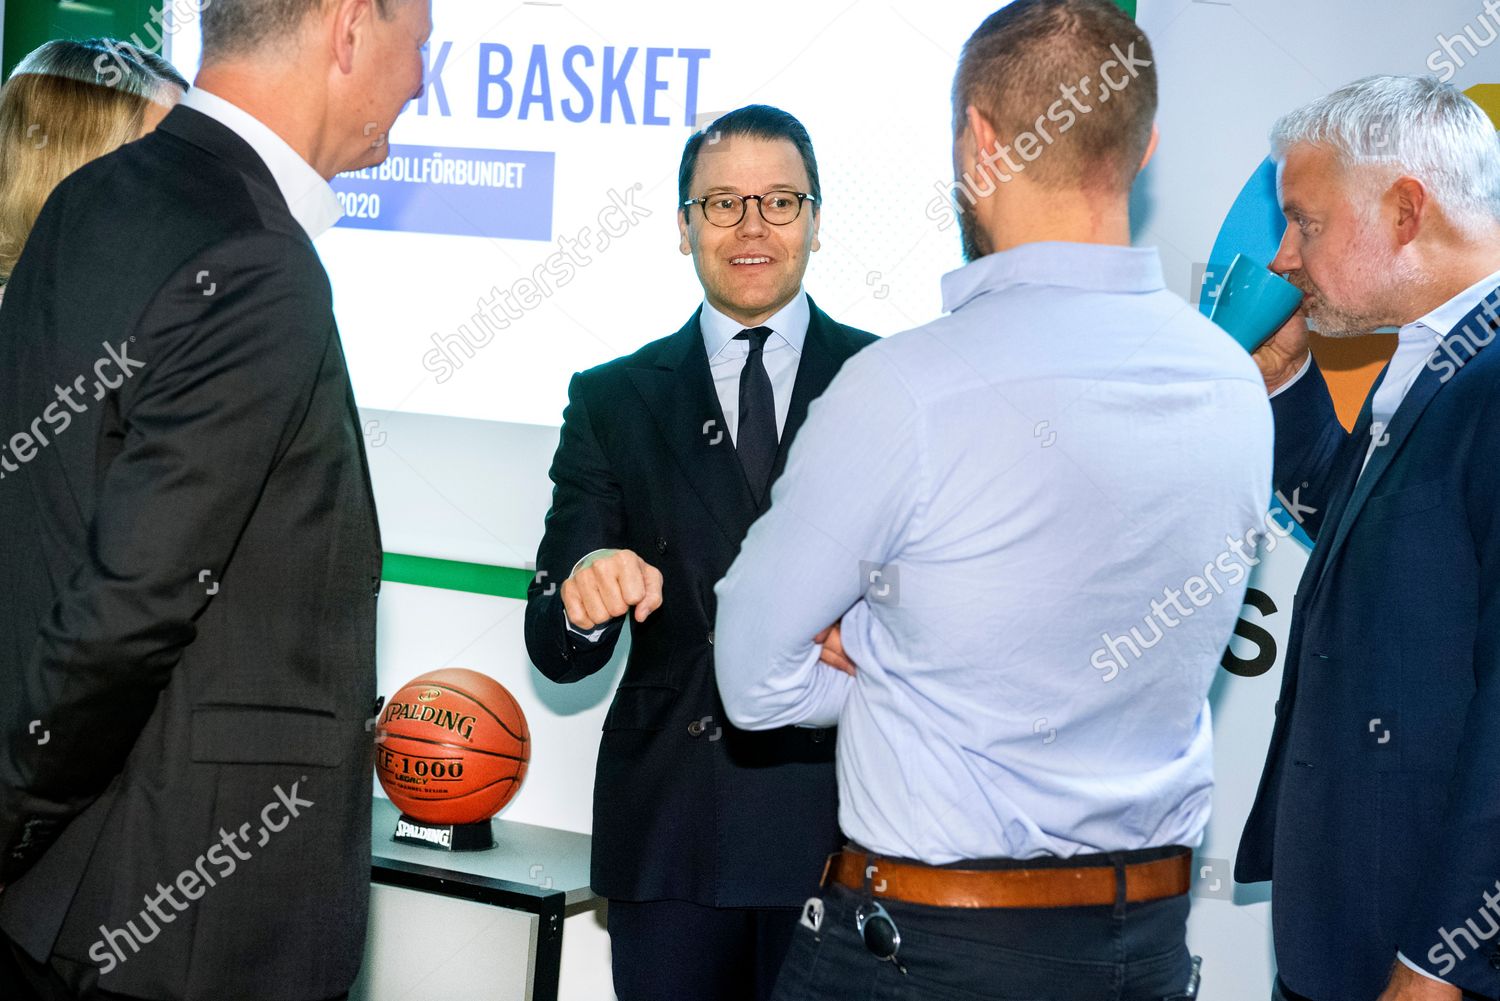 prince-daniel-visits-the-swedish-basketball-union-stockholm-sweden-shutterstock-editorial-10522277h.jpg